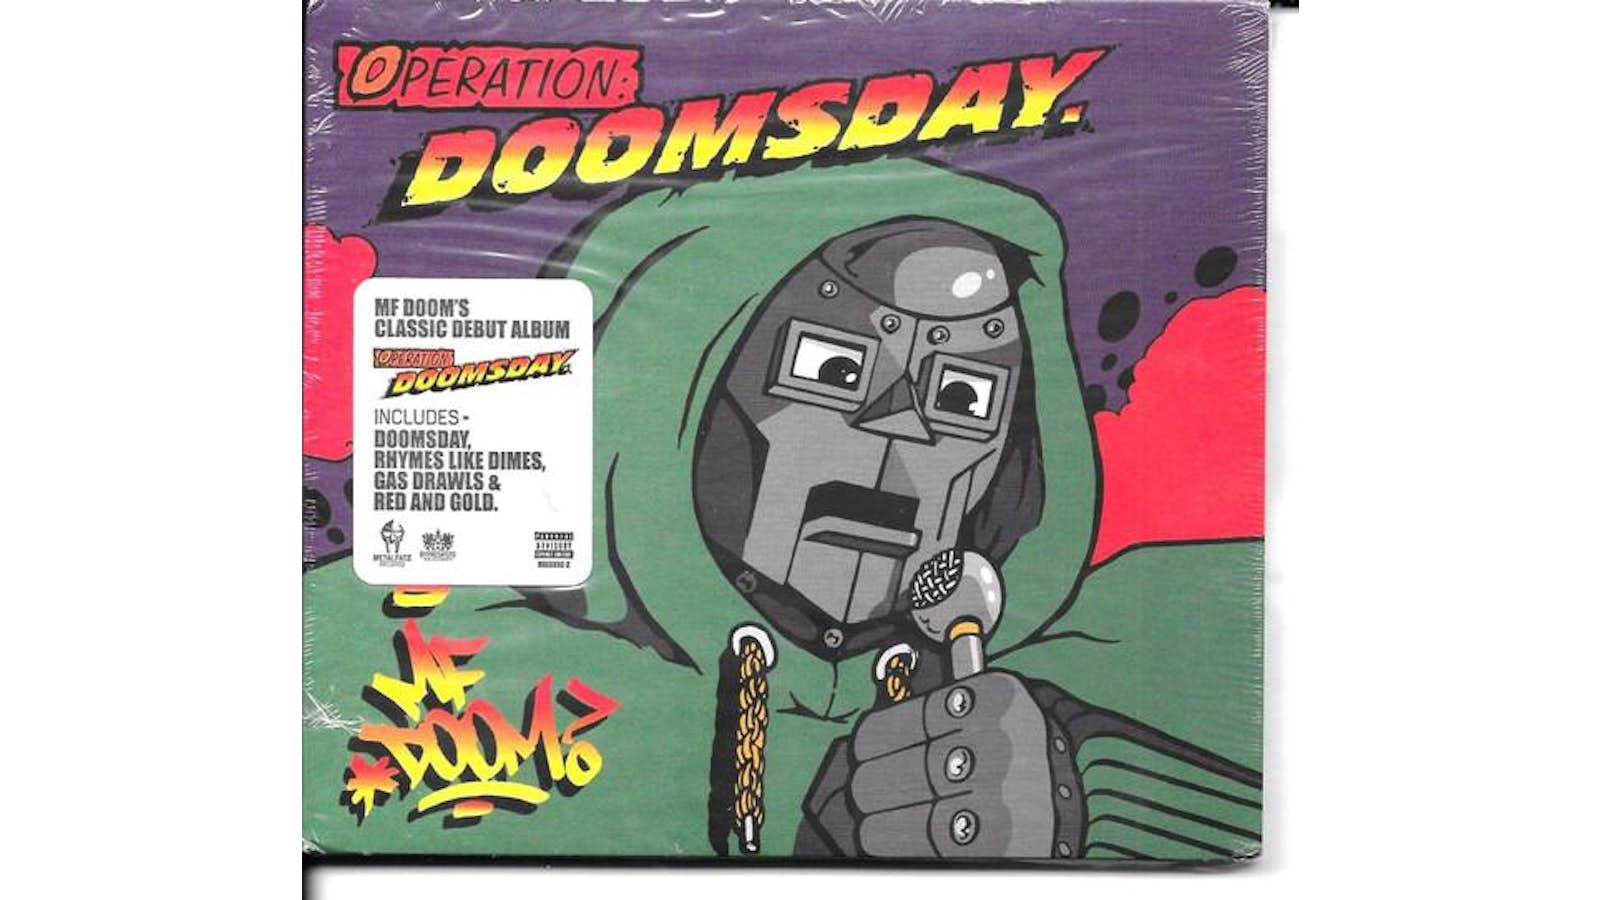 Doomsday — MF DOOM